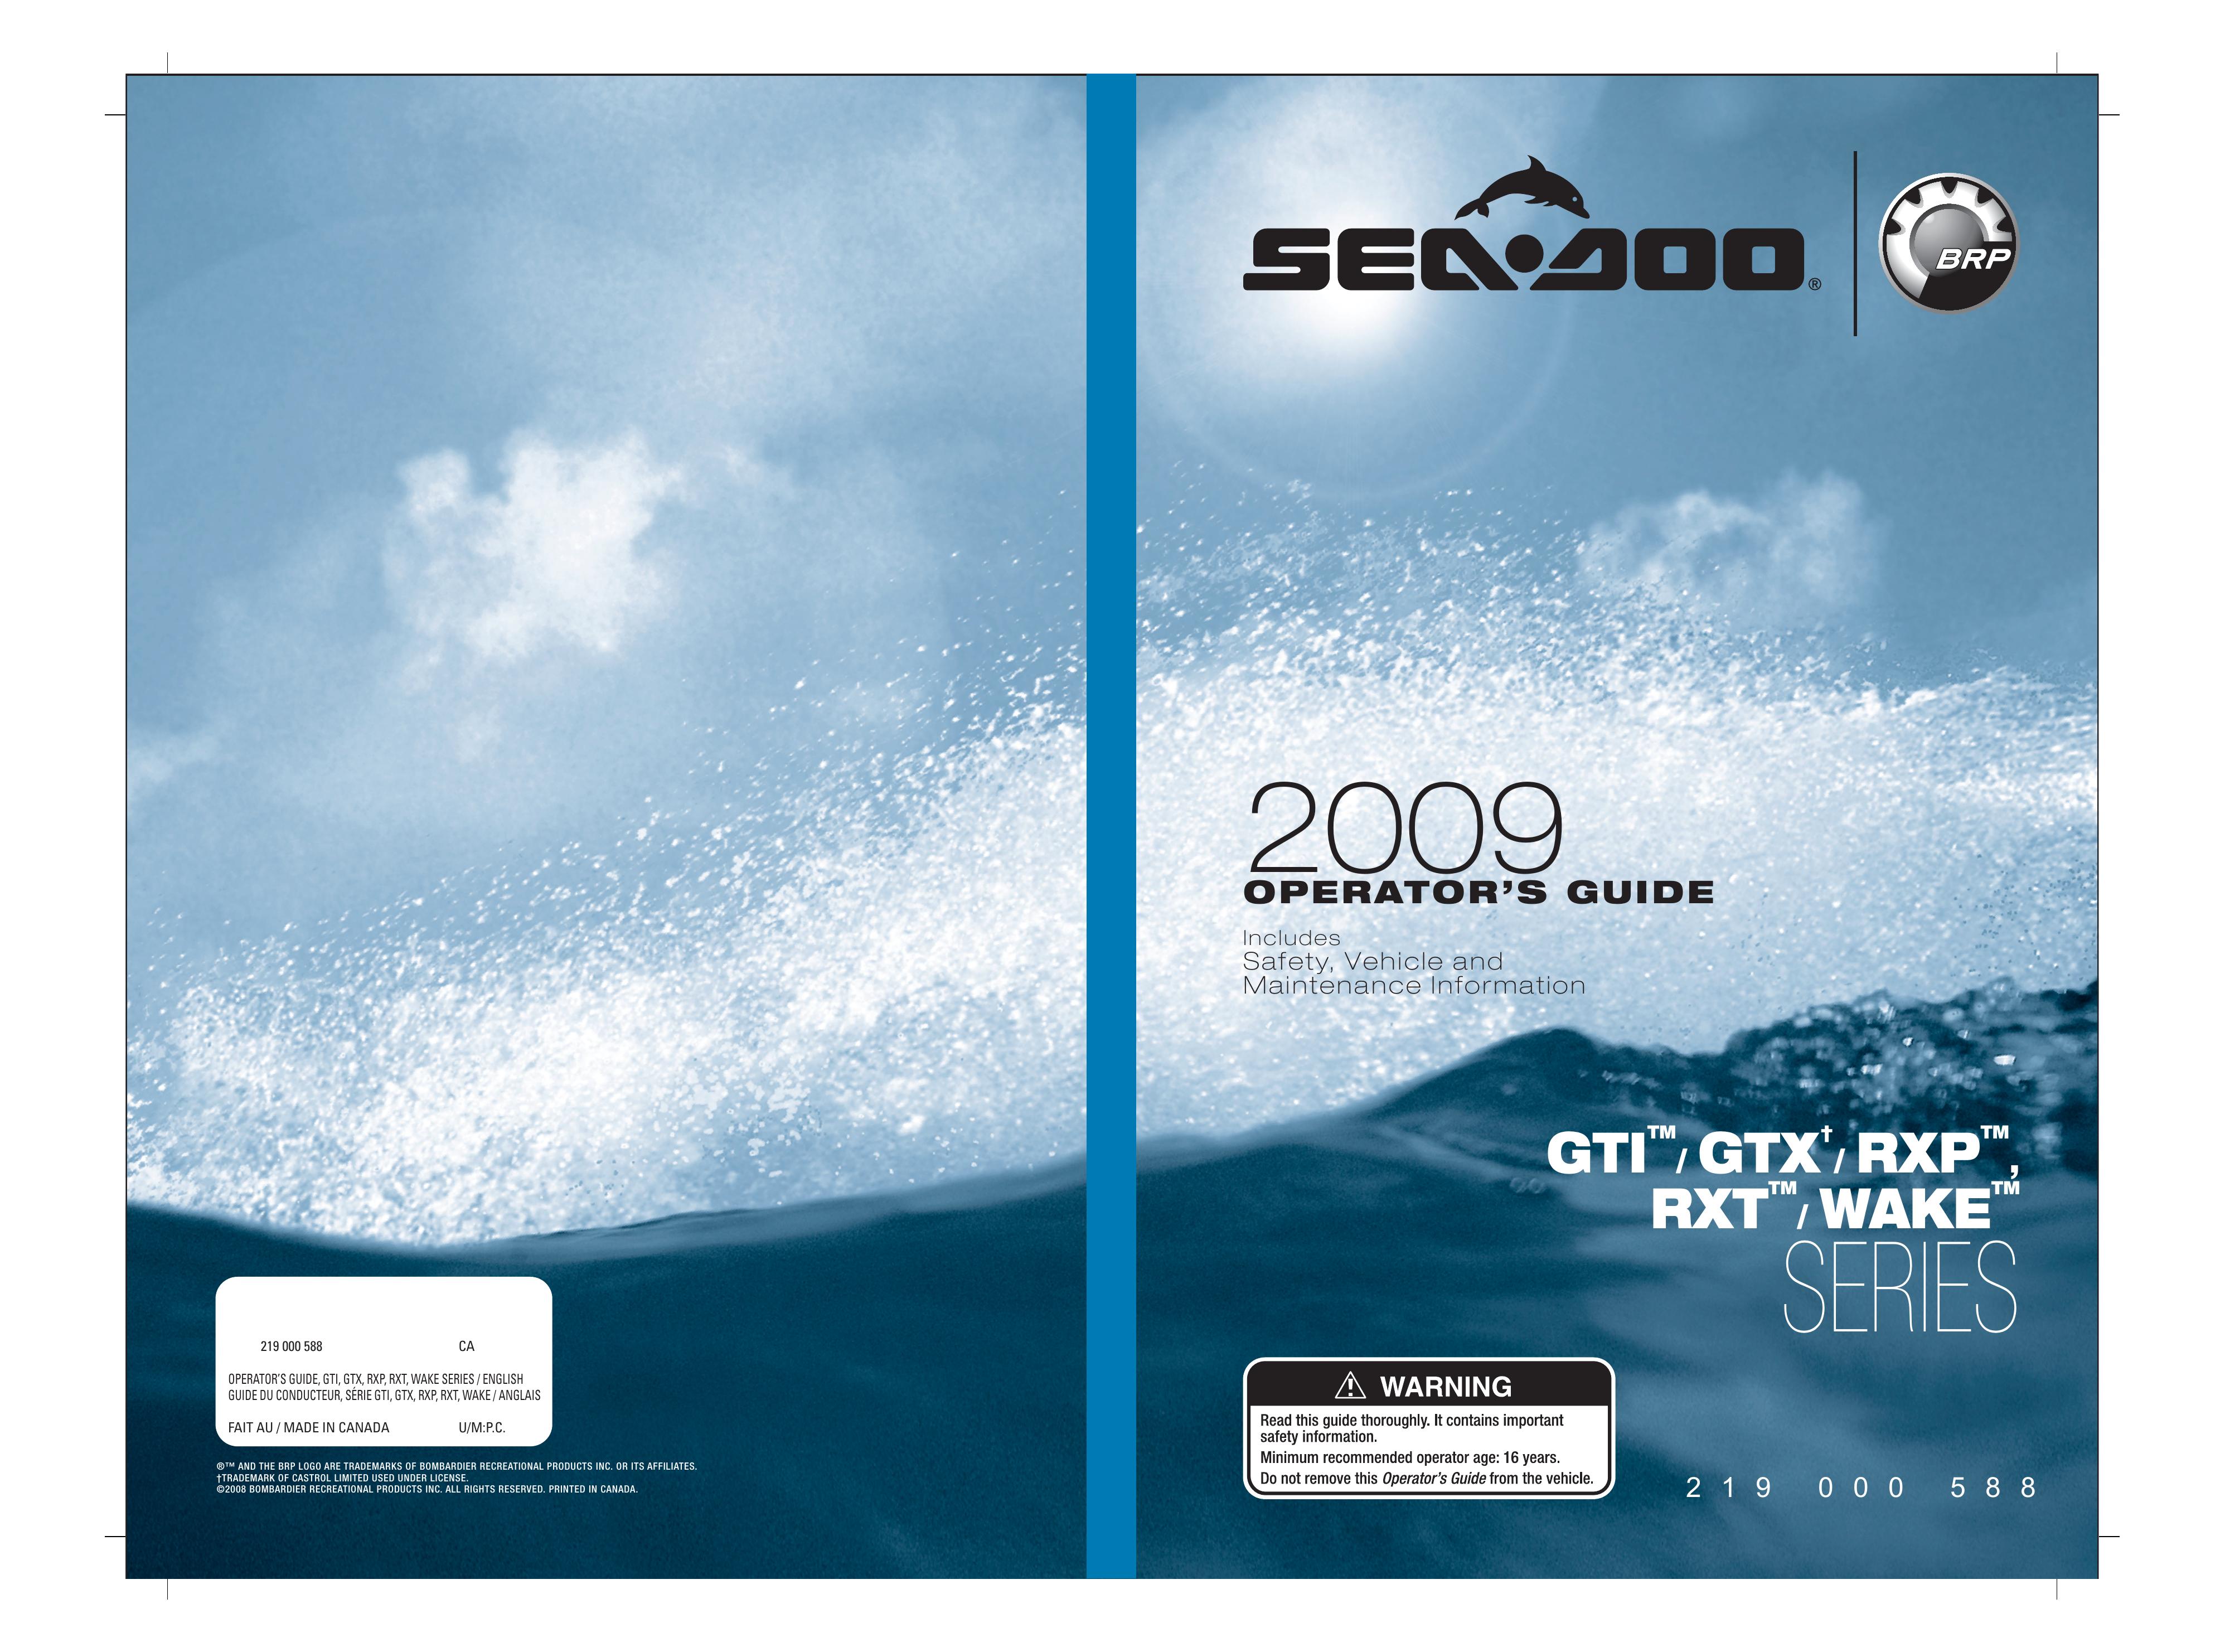 Ski-Doo RXT Series Jet Ski User Manual